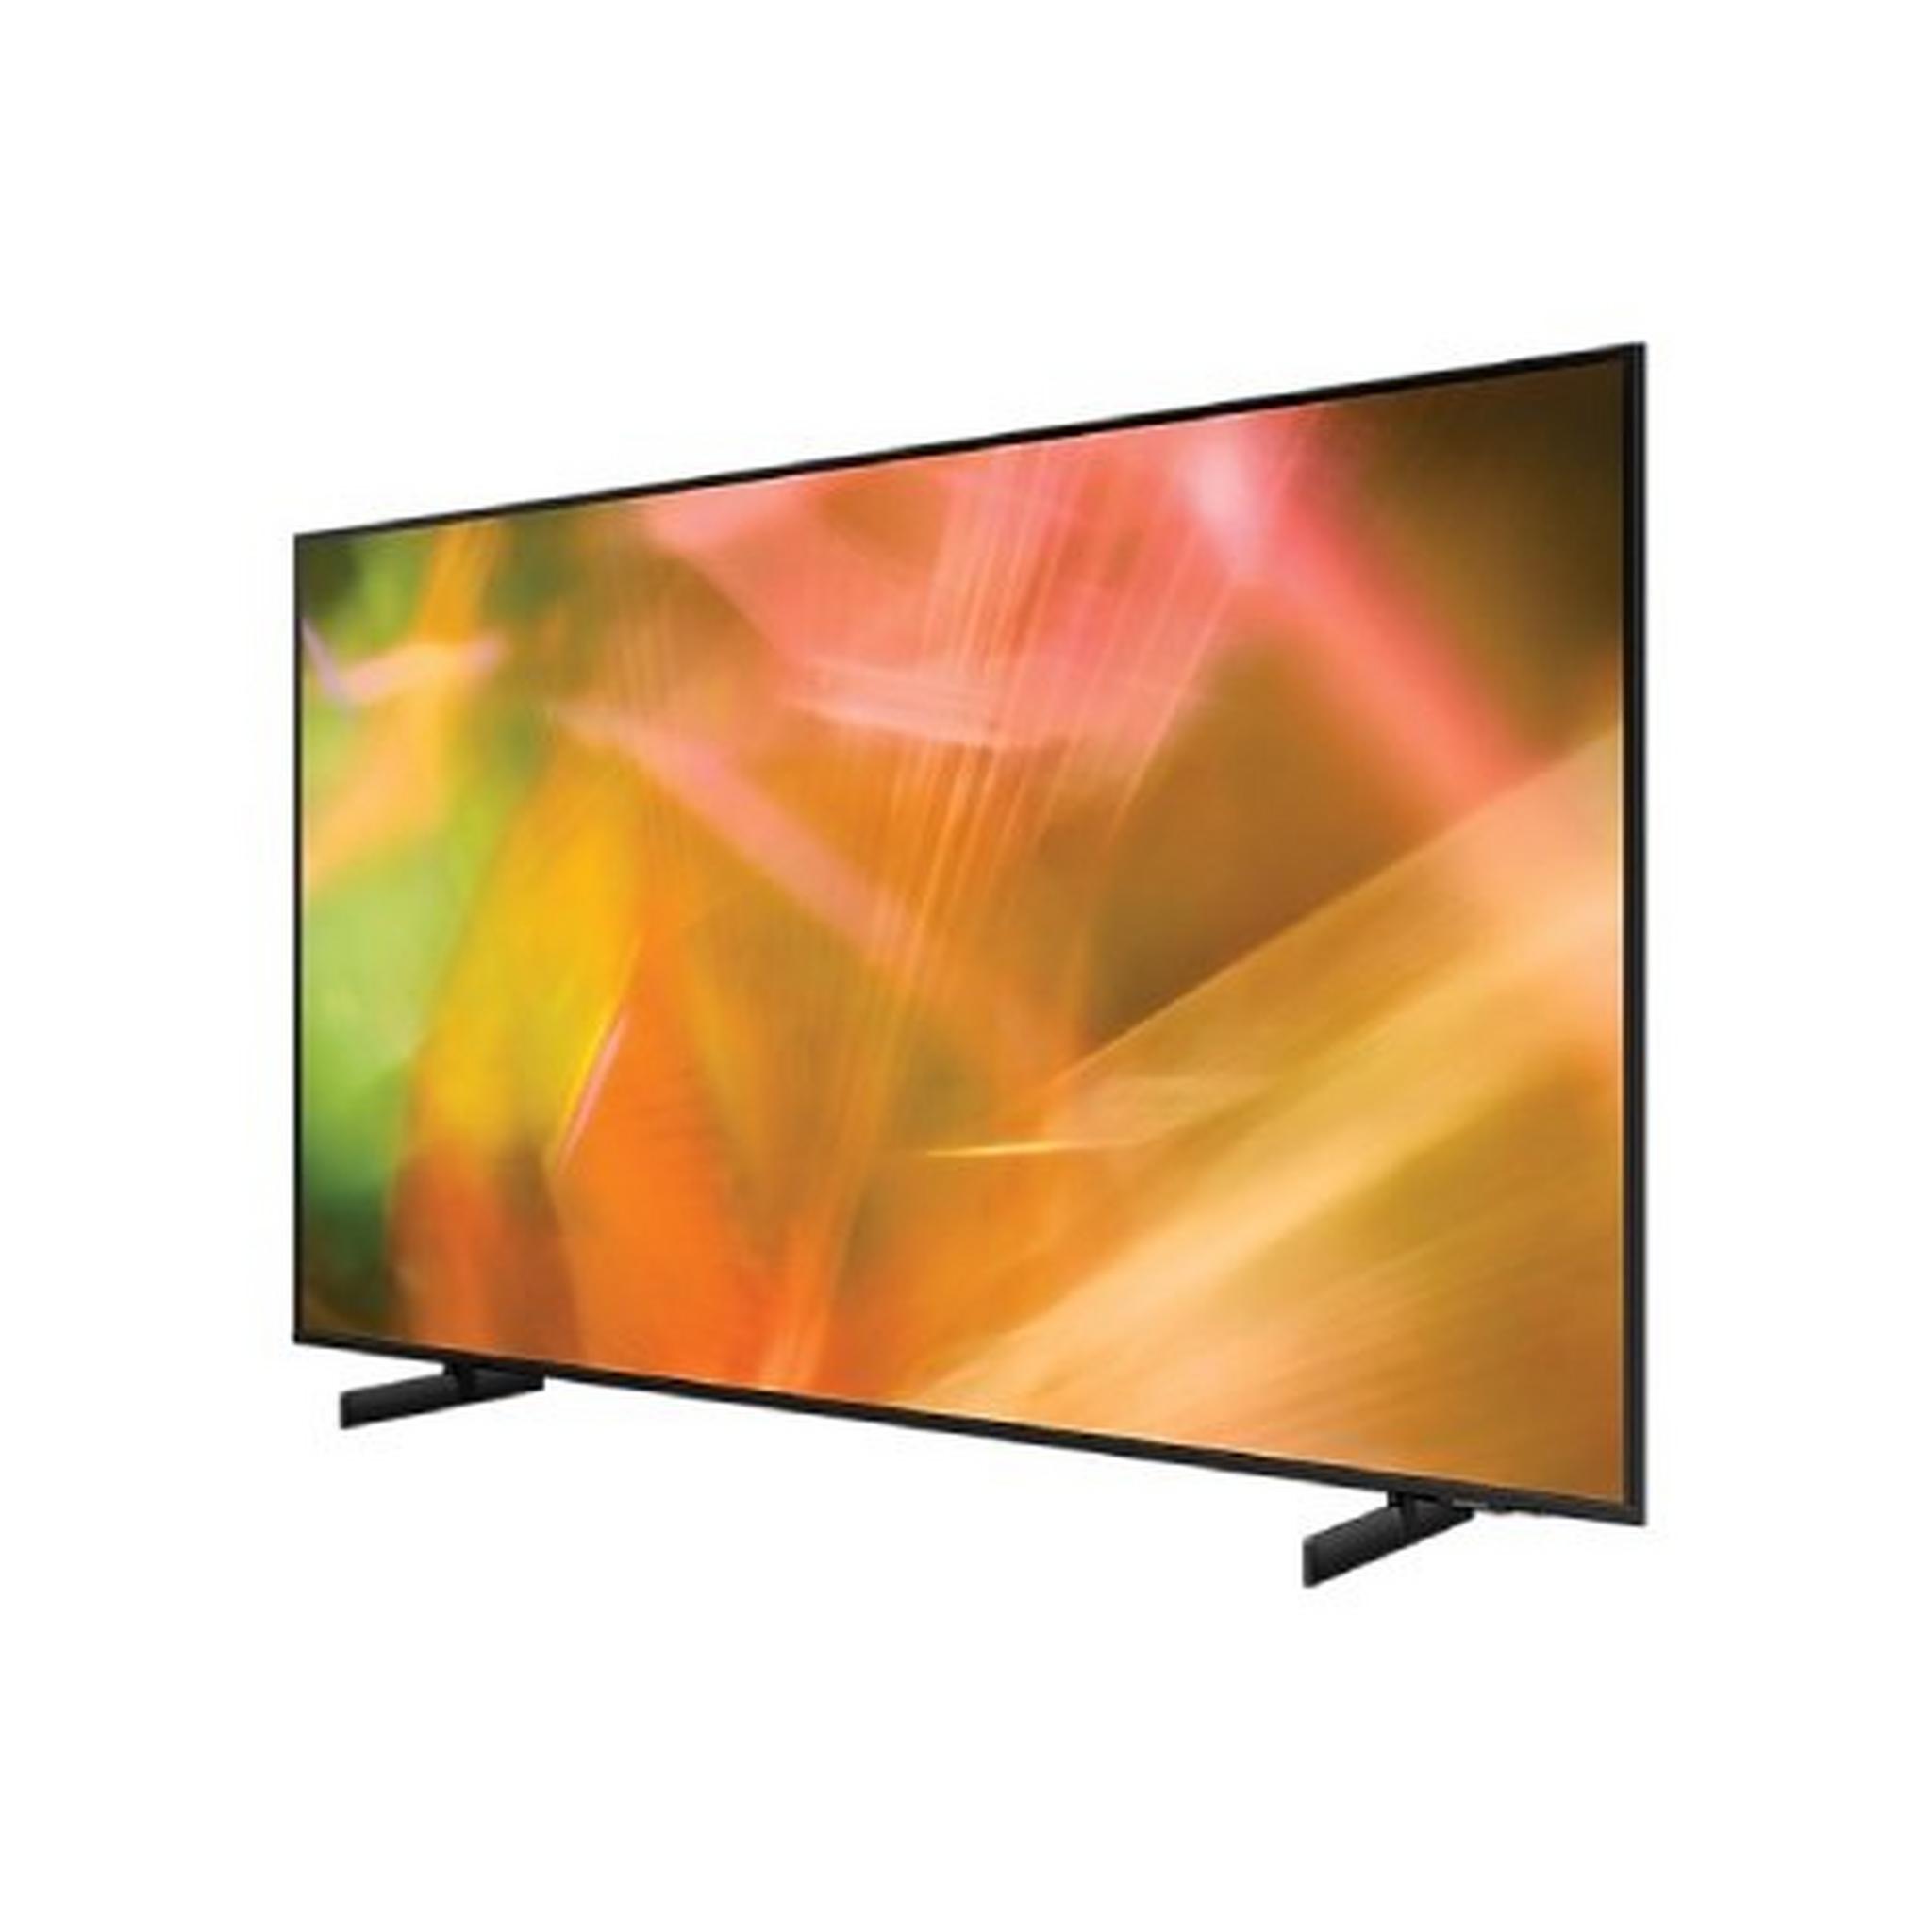 Samsung Series AU8000 60-inch Smart UHD LED TV (UA60AU8000)